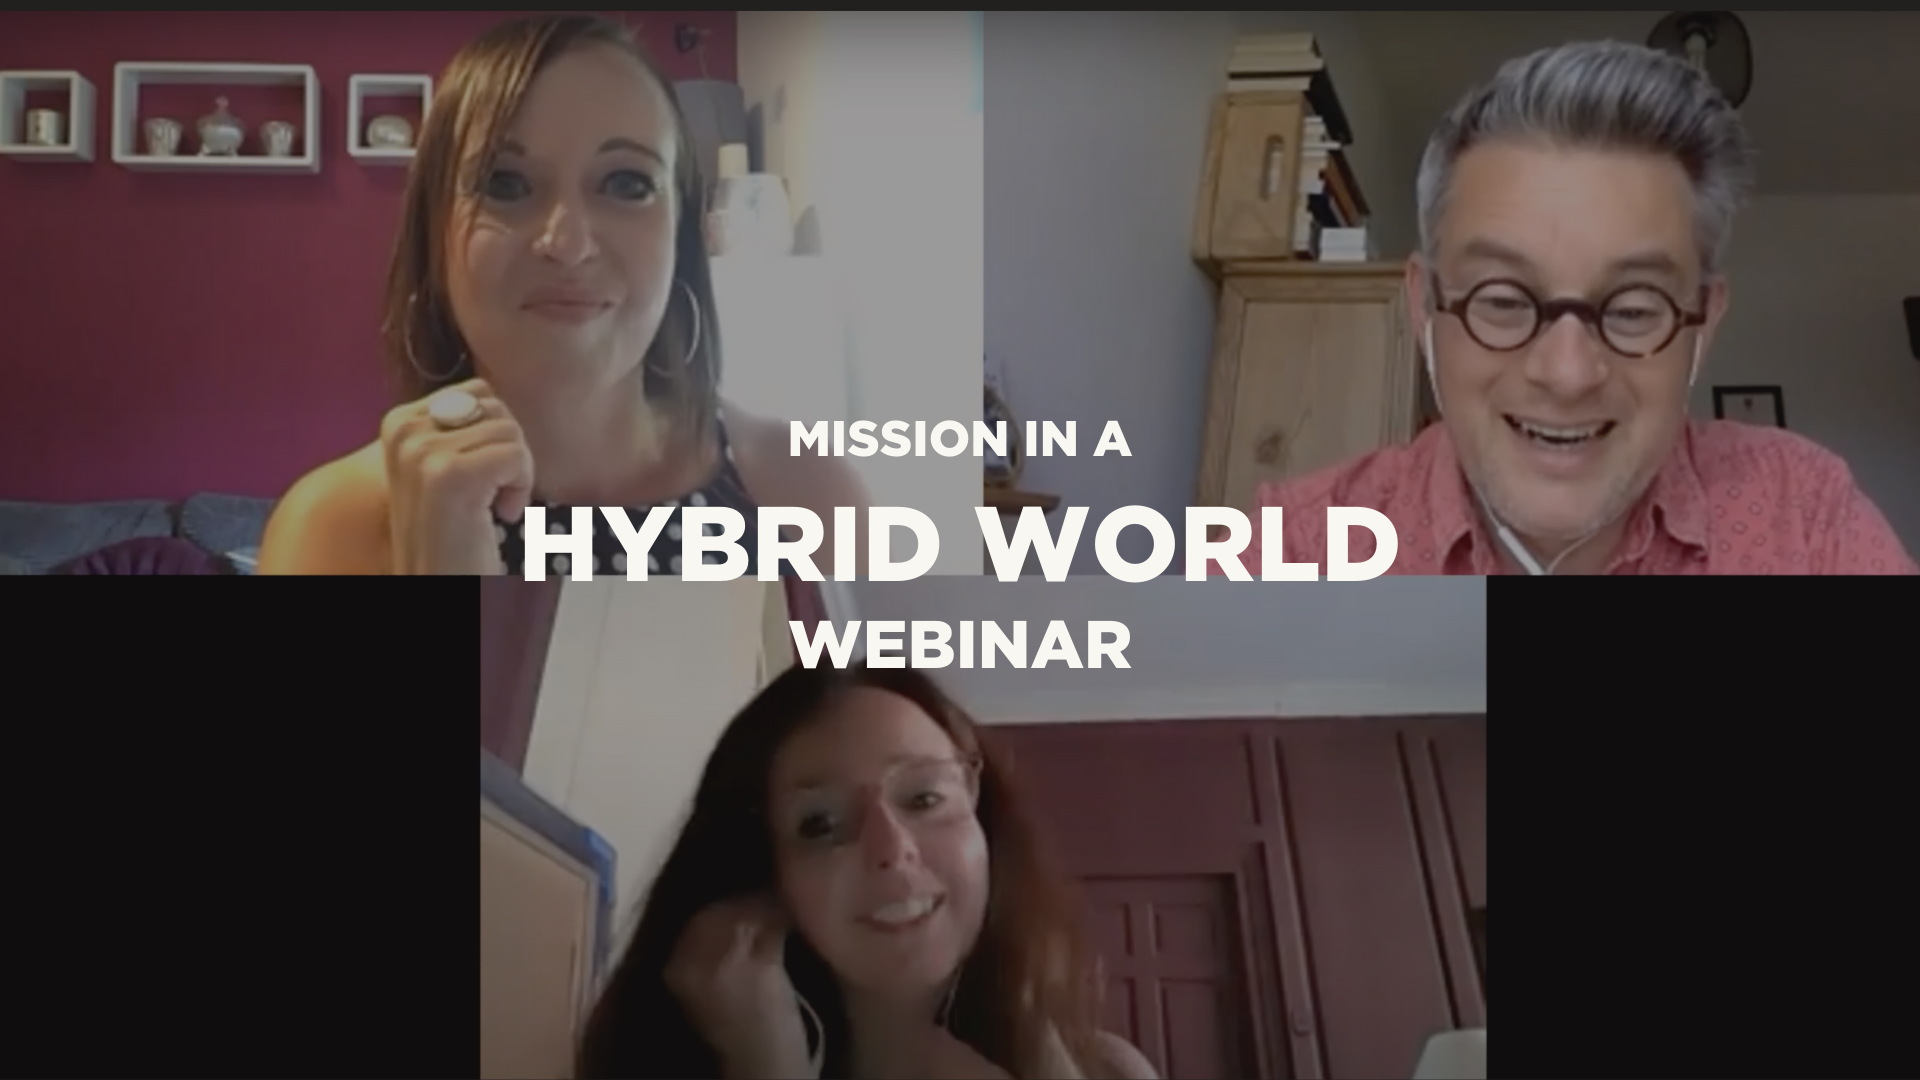 Copy of hybrid world - webinar